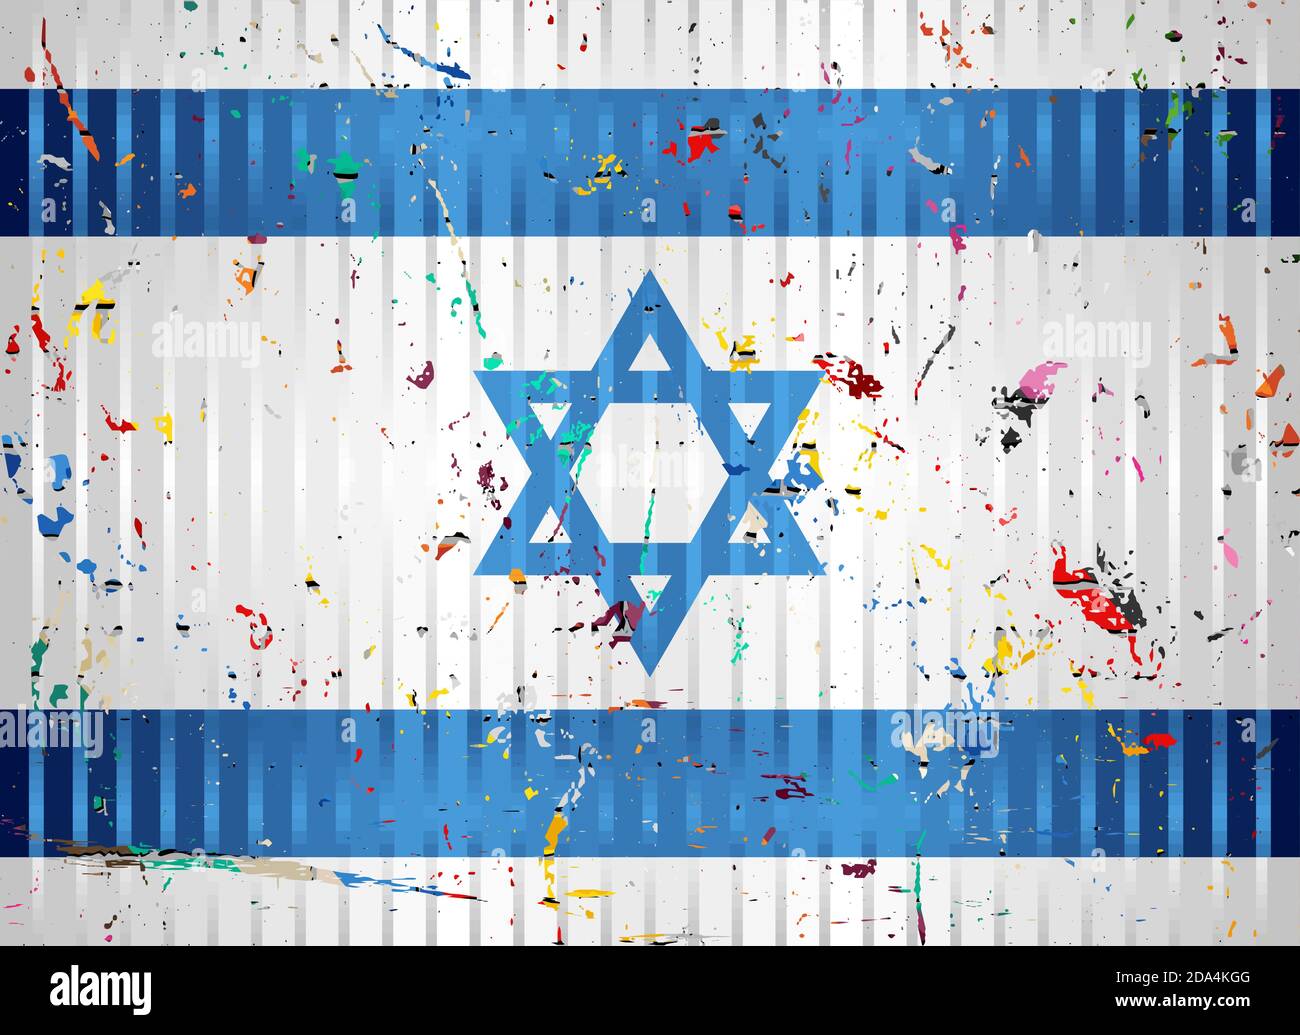 Israelische Flagge mit Farbflecken - Illustration, dreidimensionale Flagge Israels Stock Vektor